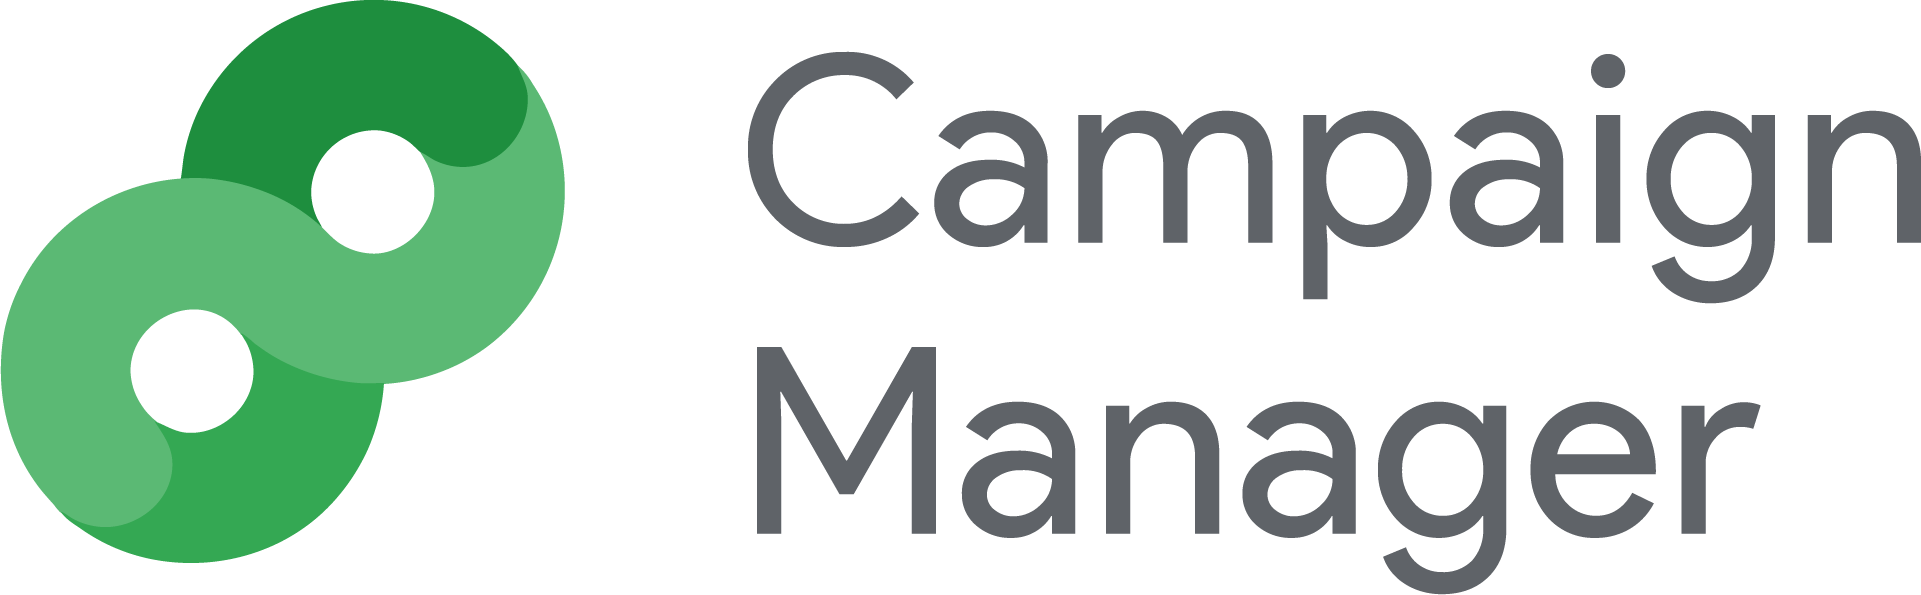 google-campaign-manager-logo-01